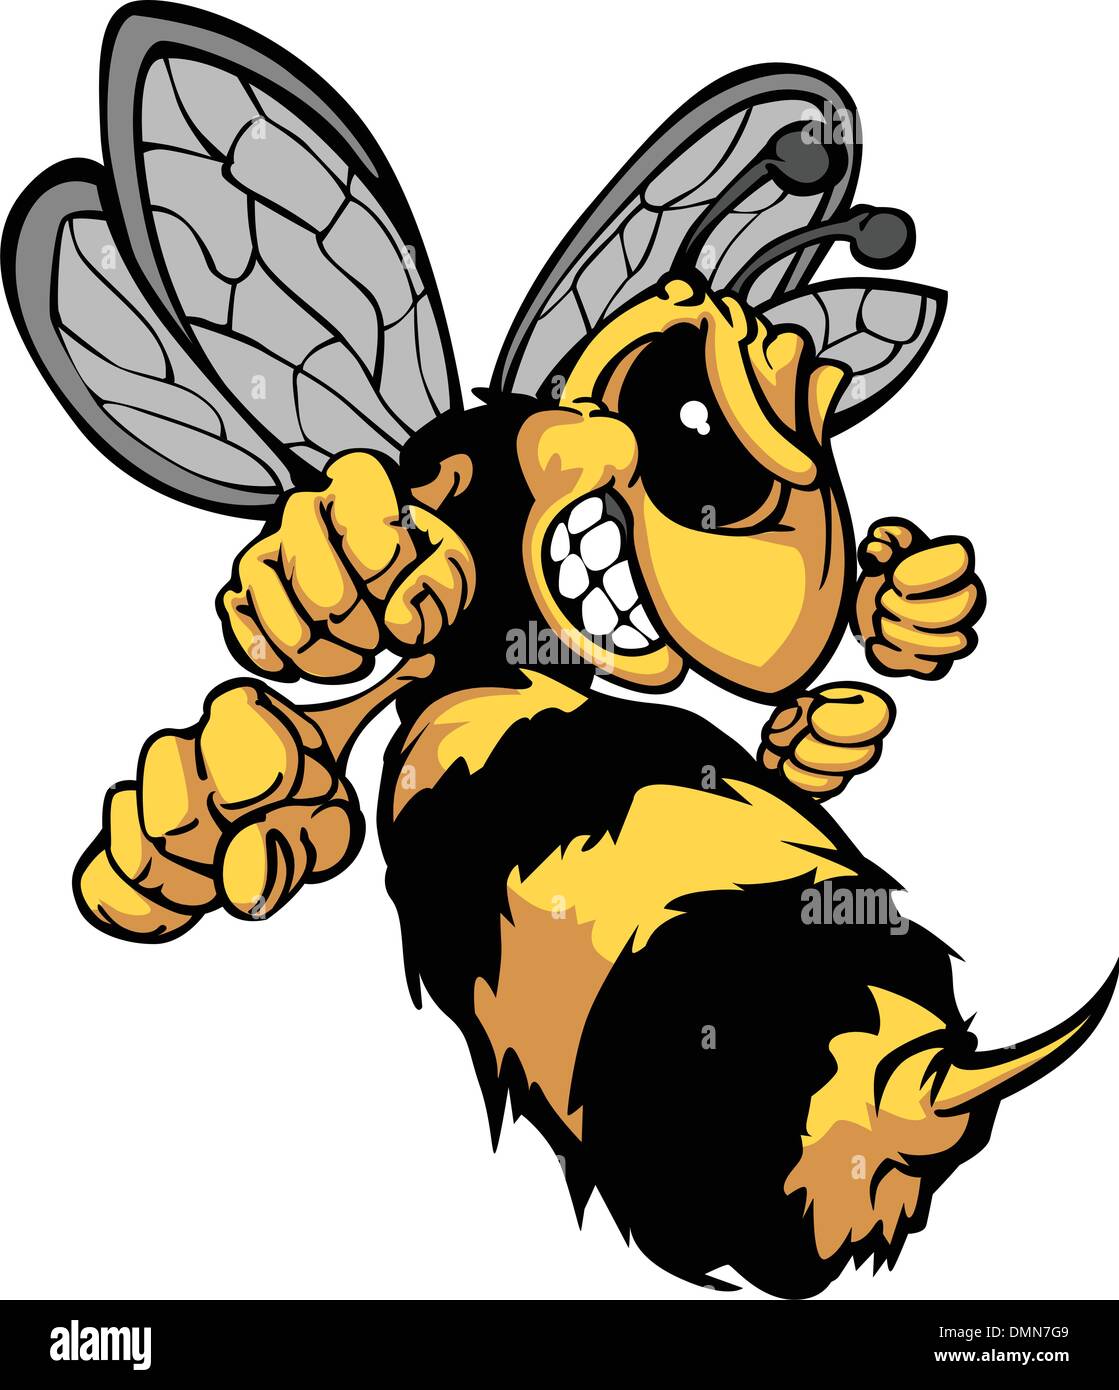 Bee Cartoon Hornet Image vectorielle Illustration de Vecteur